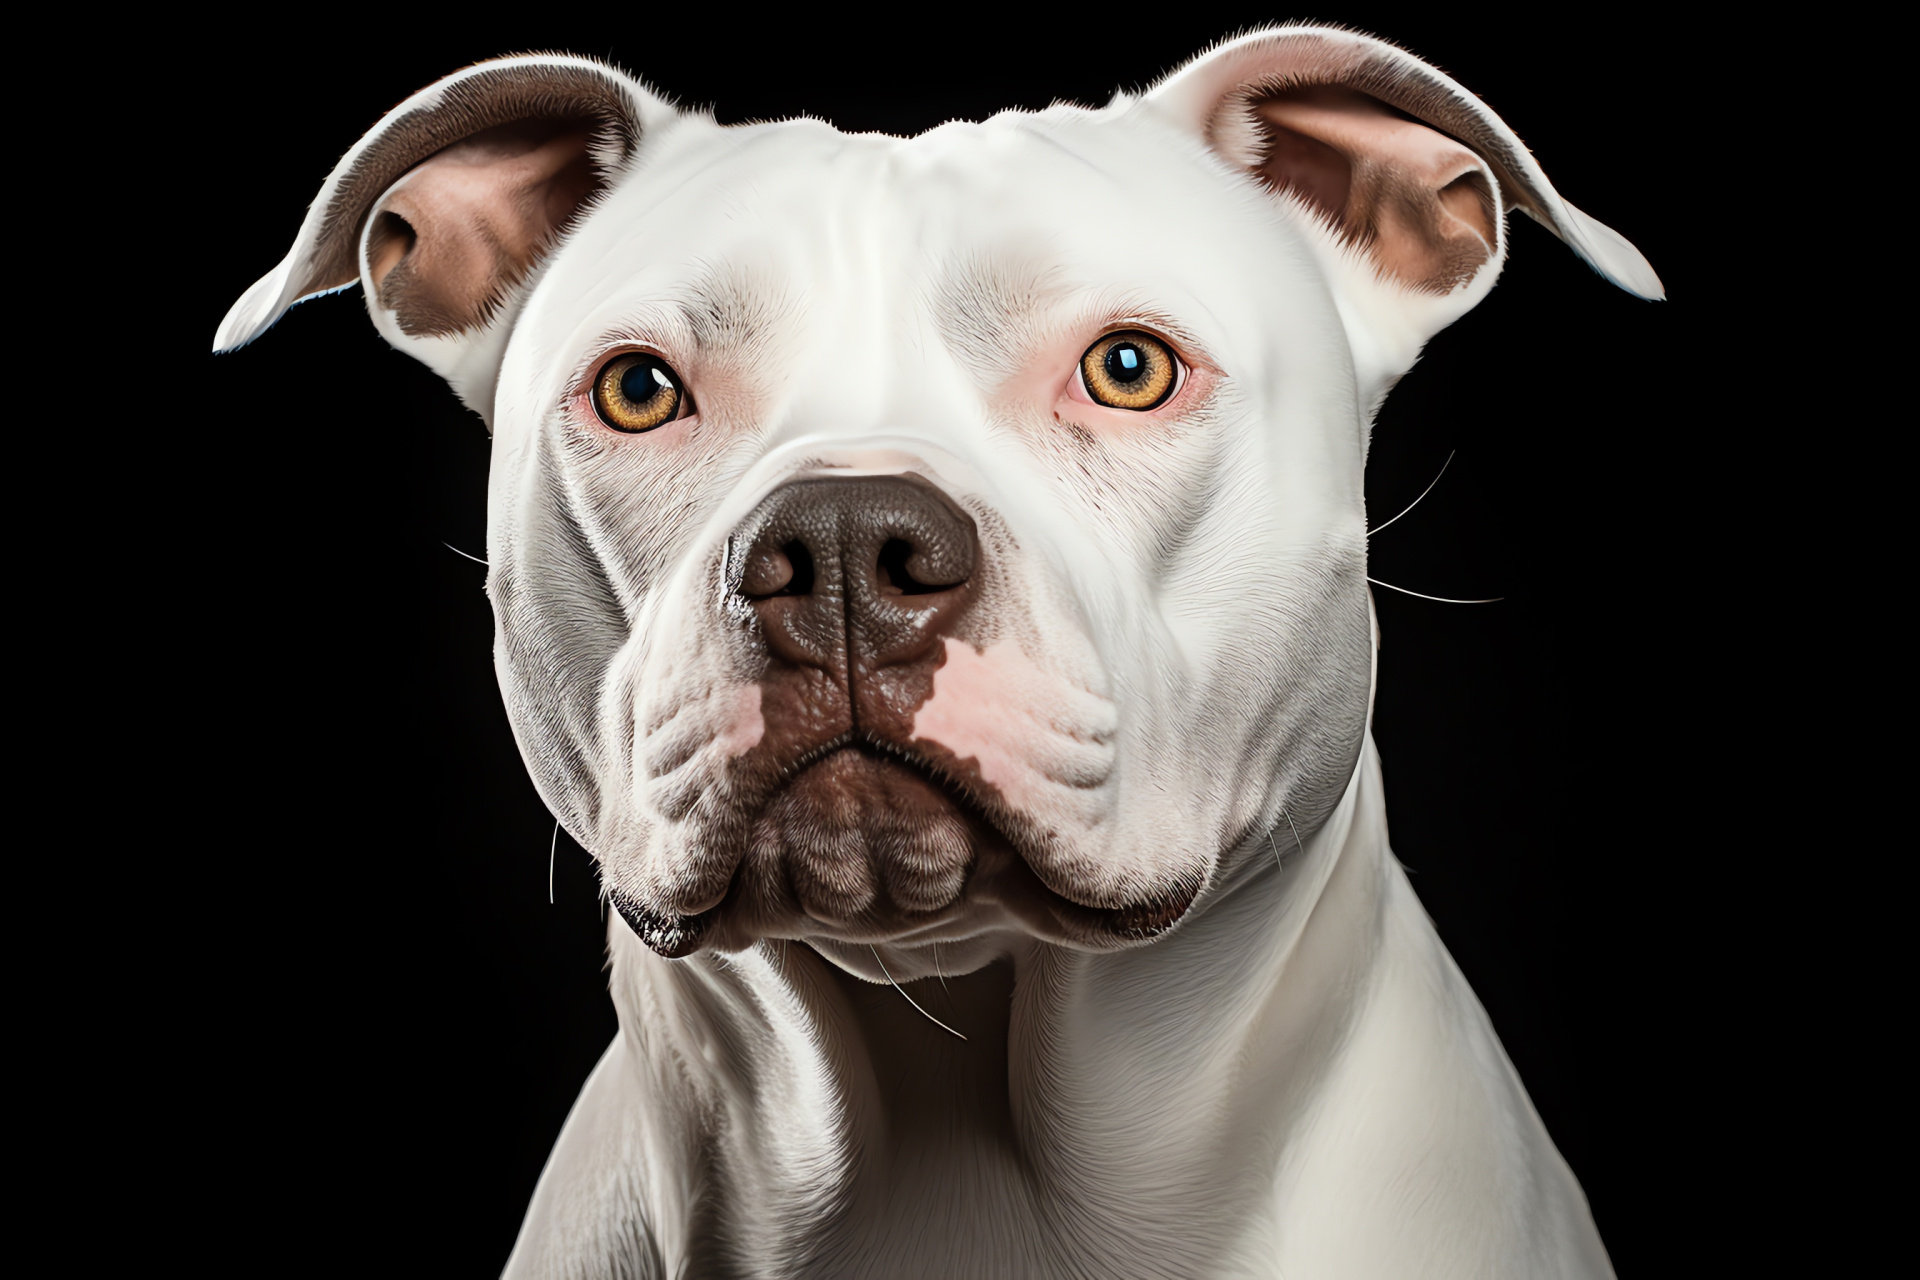 Canine Pitbull, Pitbull facial expressions, Bi-color Pitbull, Pitbull breed features, Strong Pitbull posture, HD Desktop Image